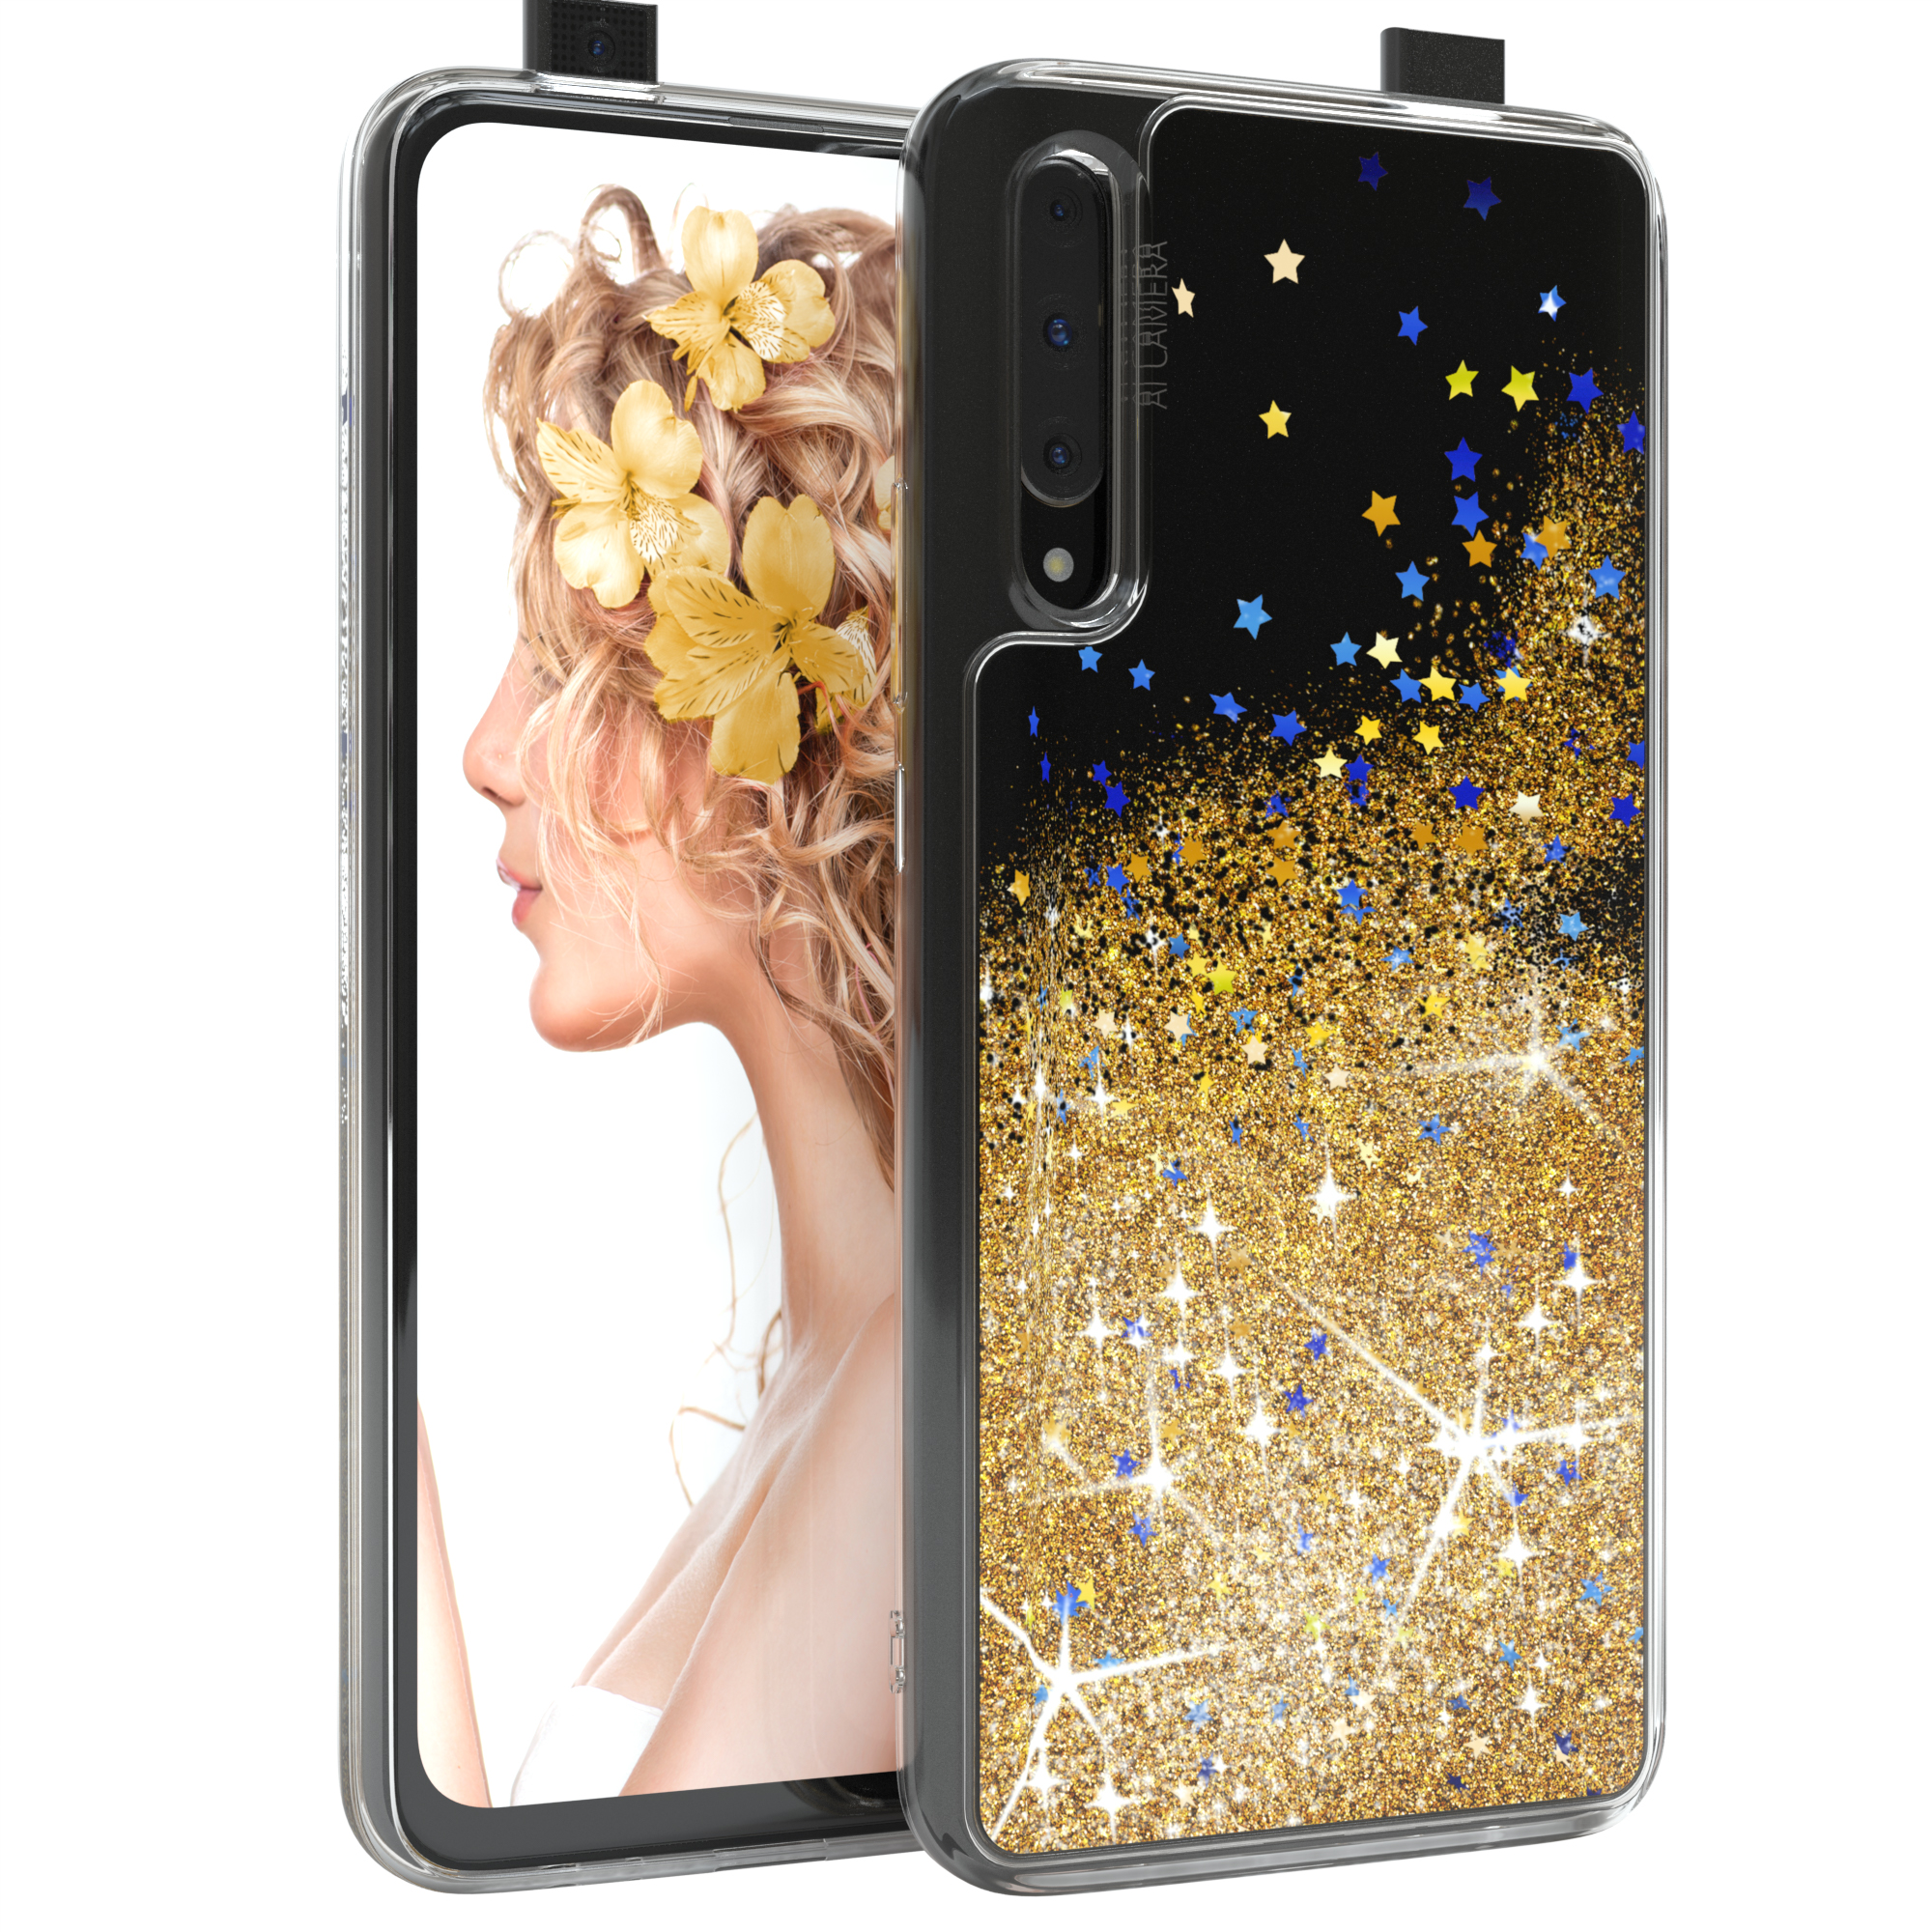 P Flüssig, Pro, 9X Smart (2019) EAZY Gold Huawei, / Backcover, Honor Glitzerhülle / Pro CASE Y9s